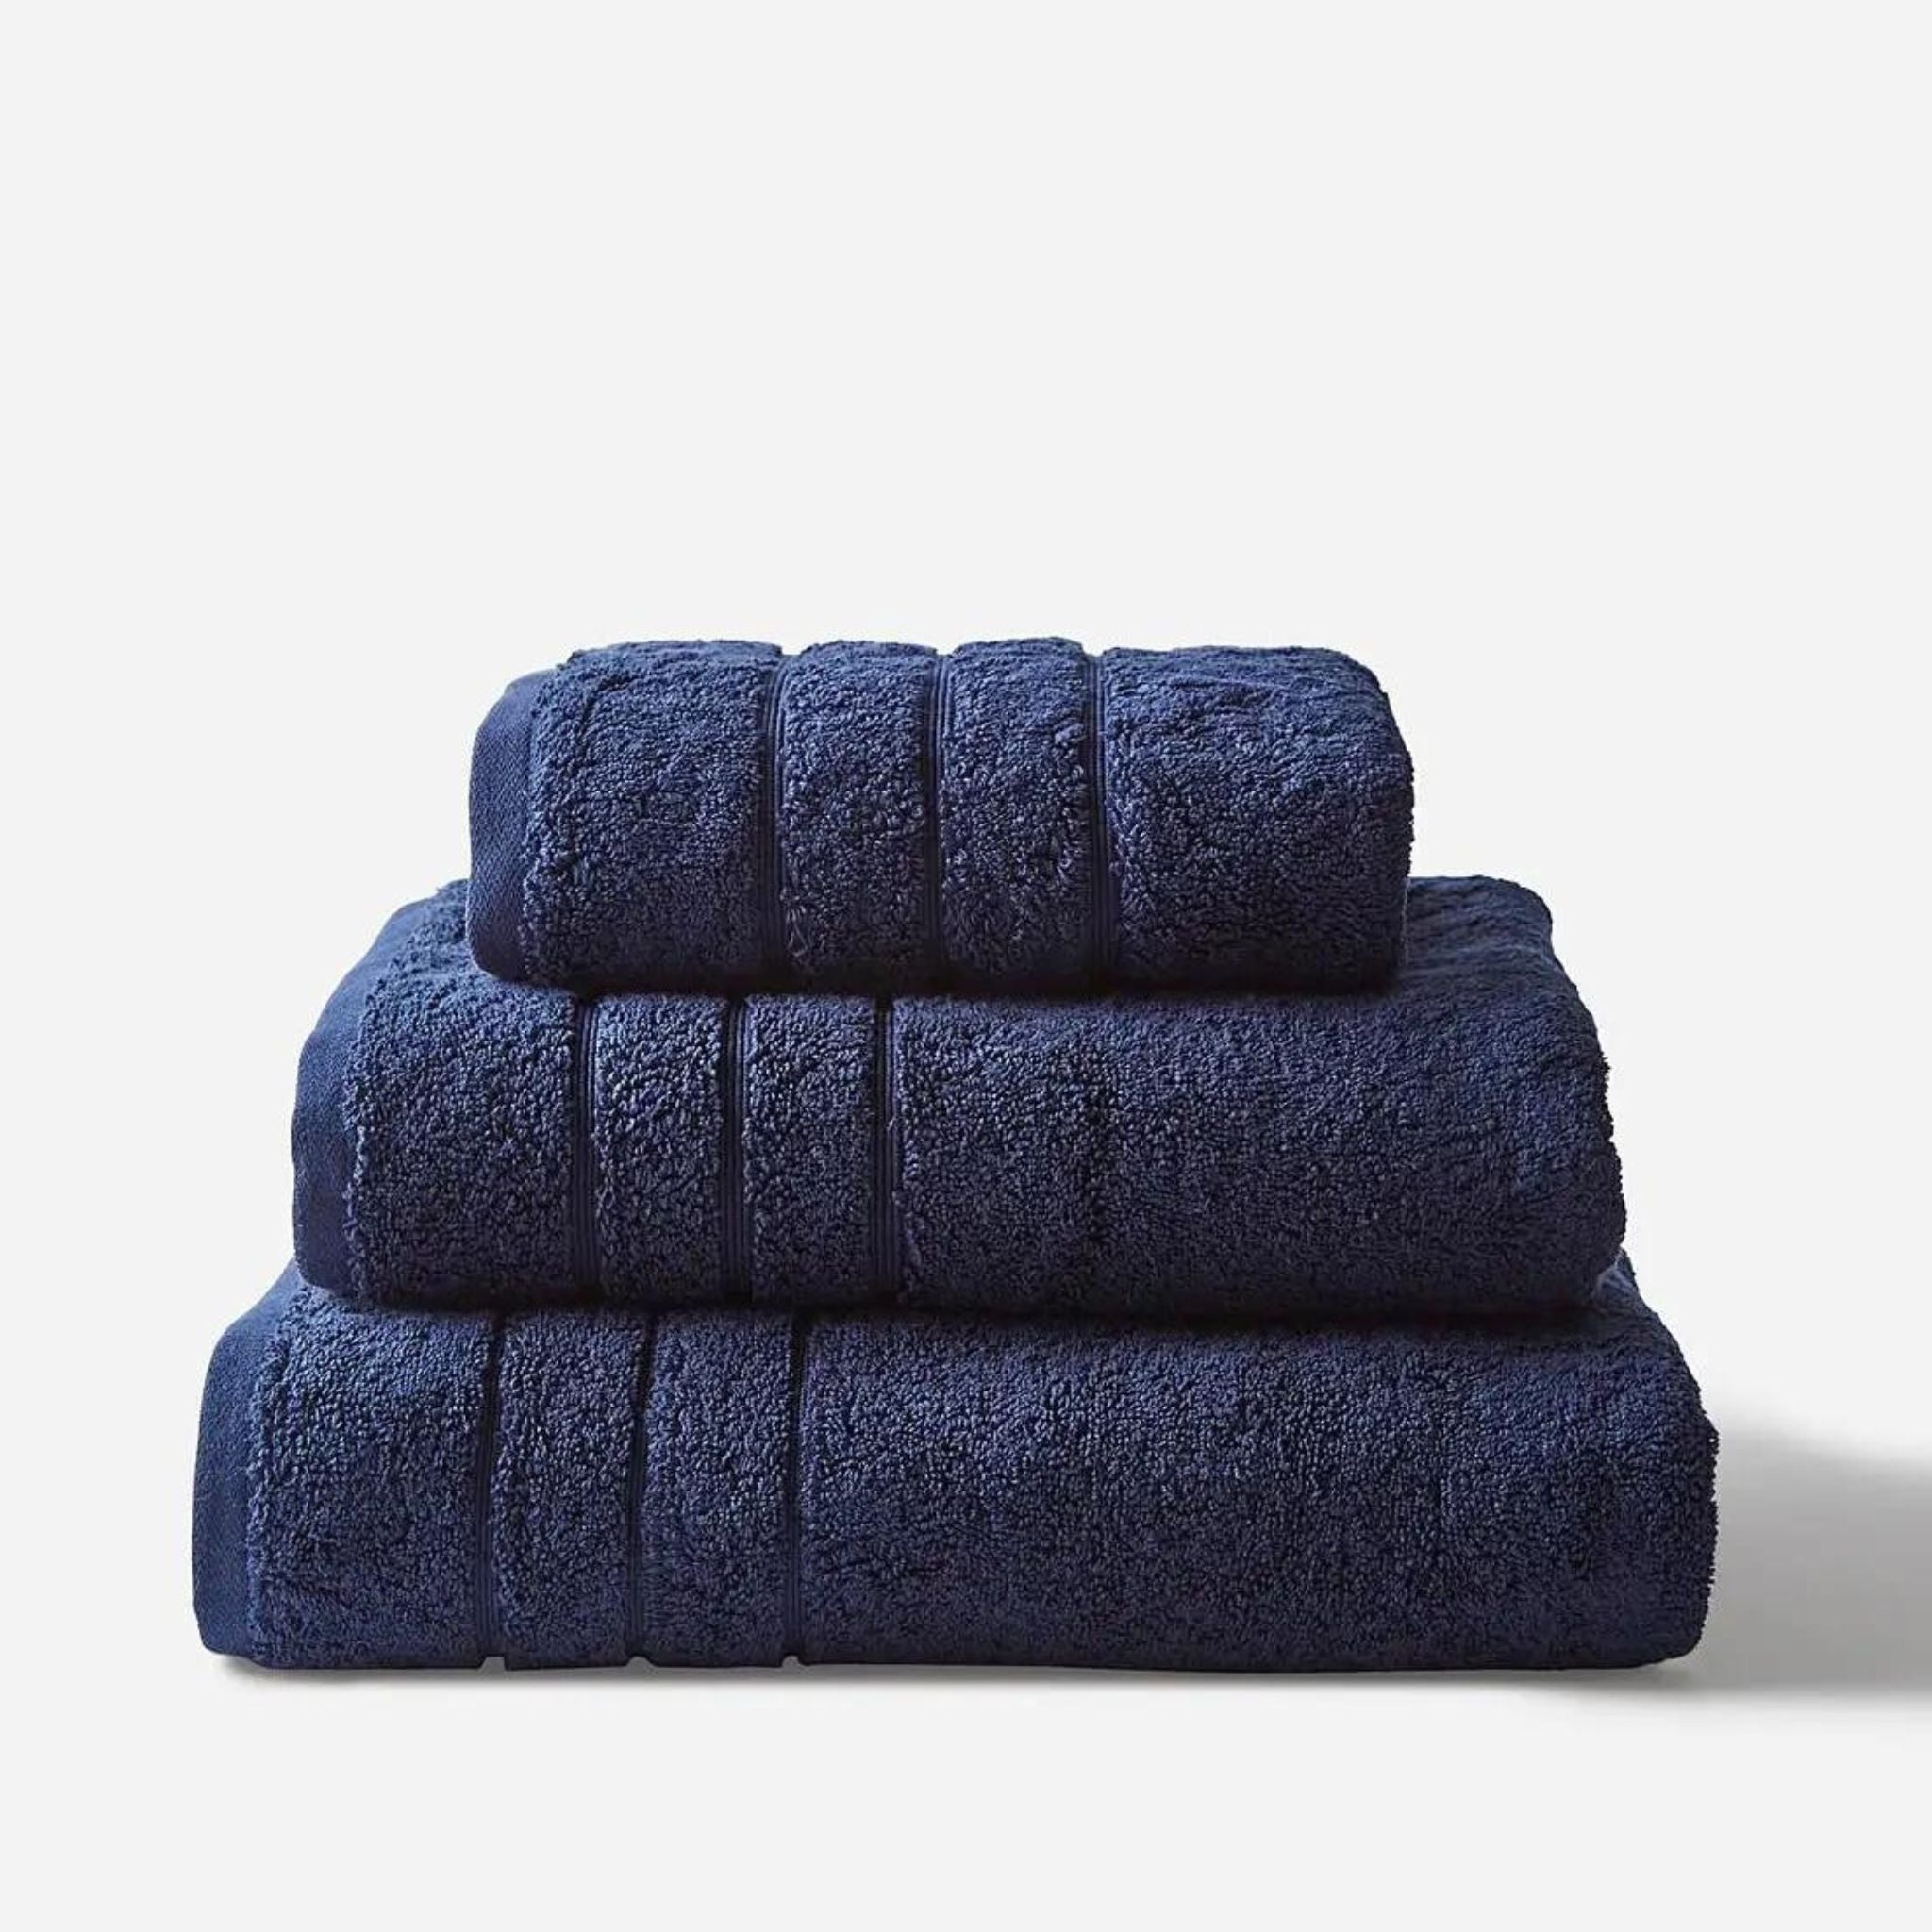 Supima Cotton Bath Towel Navy - Two Towels